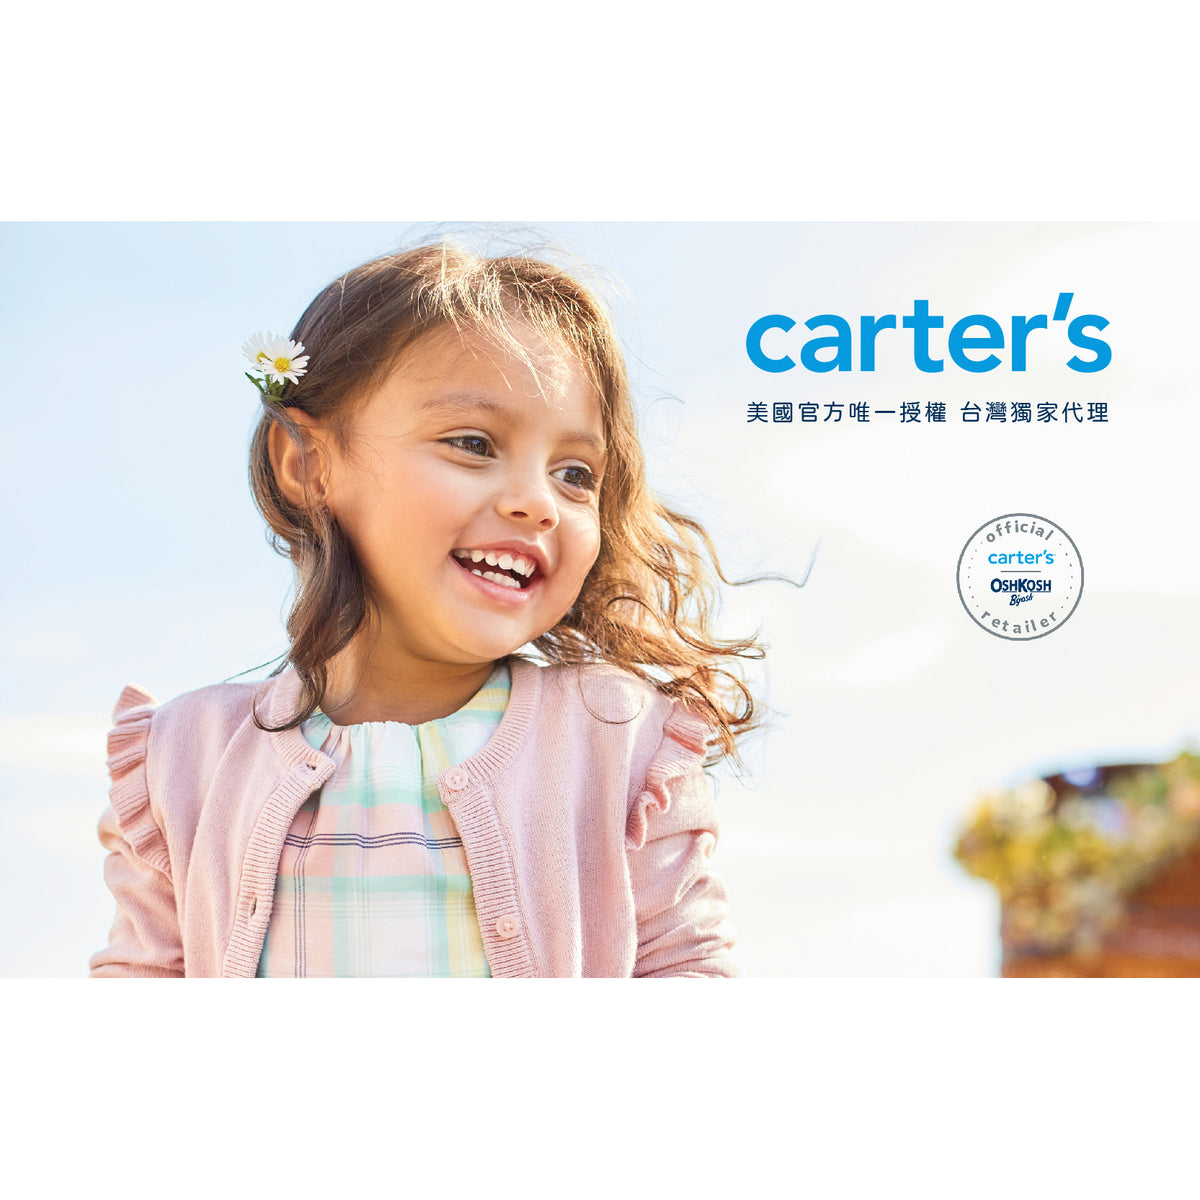 Carter's 棉花糖公主背心(2T-5T)